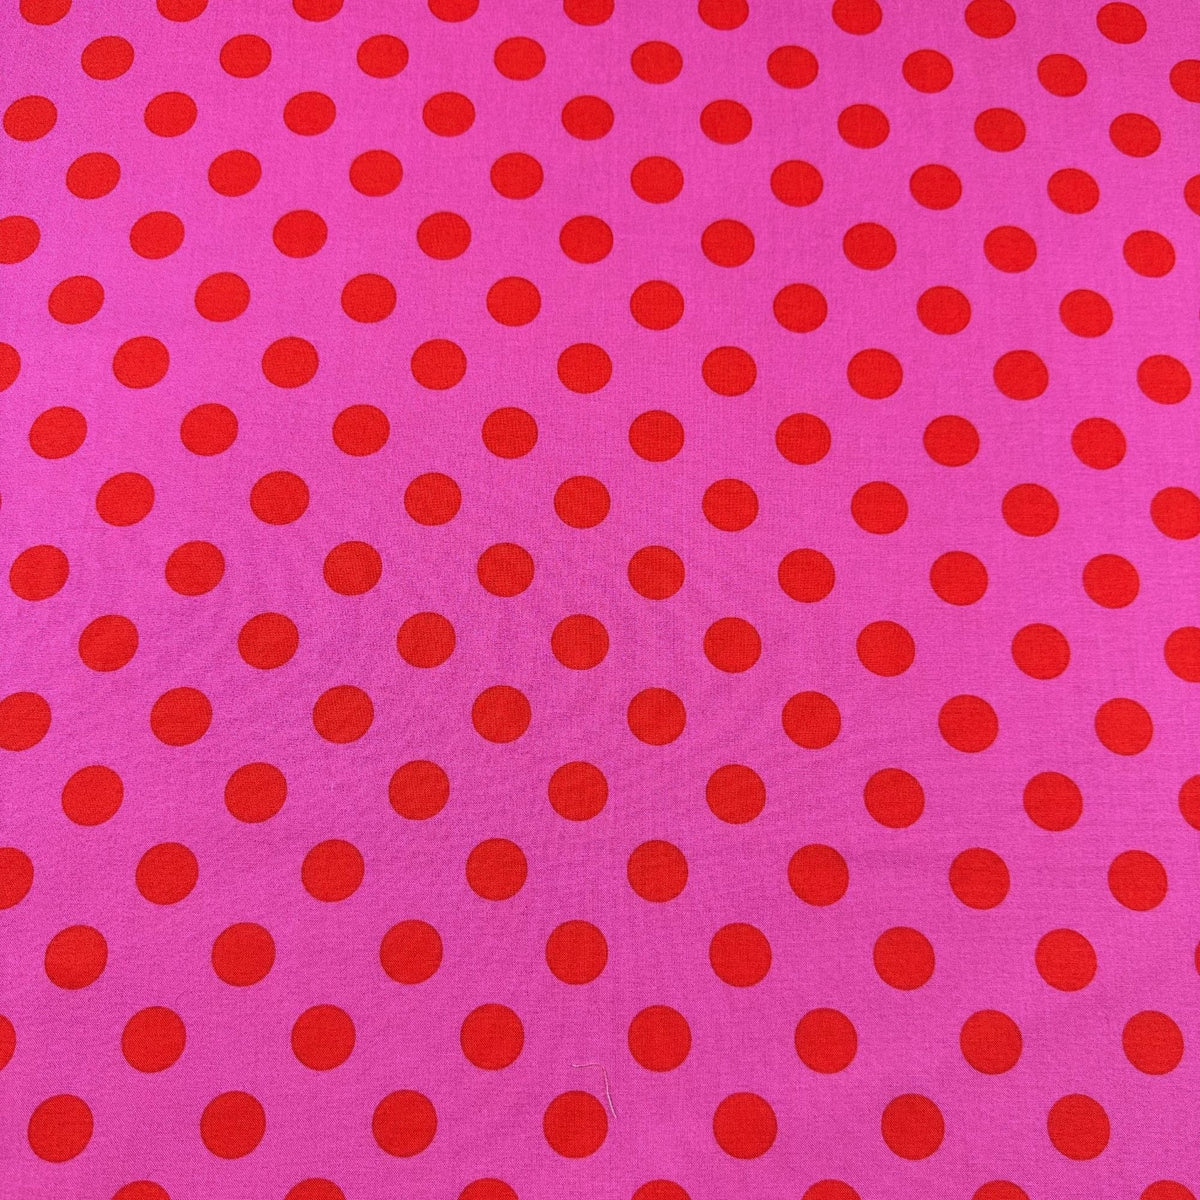  TONIFUL 3/4 Inch x 100 Yards Peach Pink Polka Dots